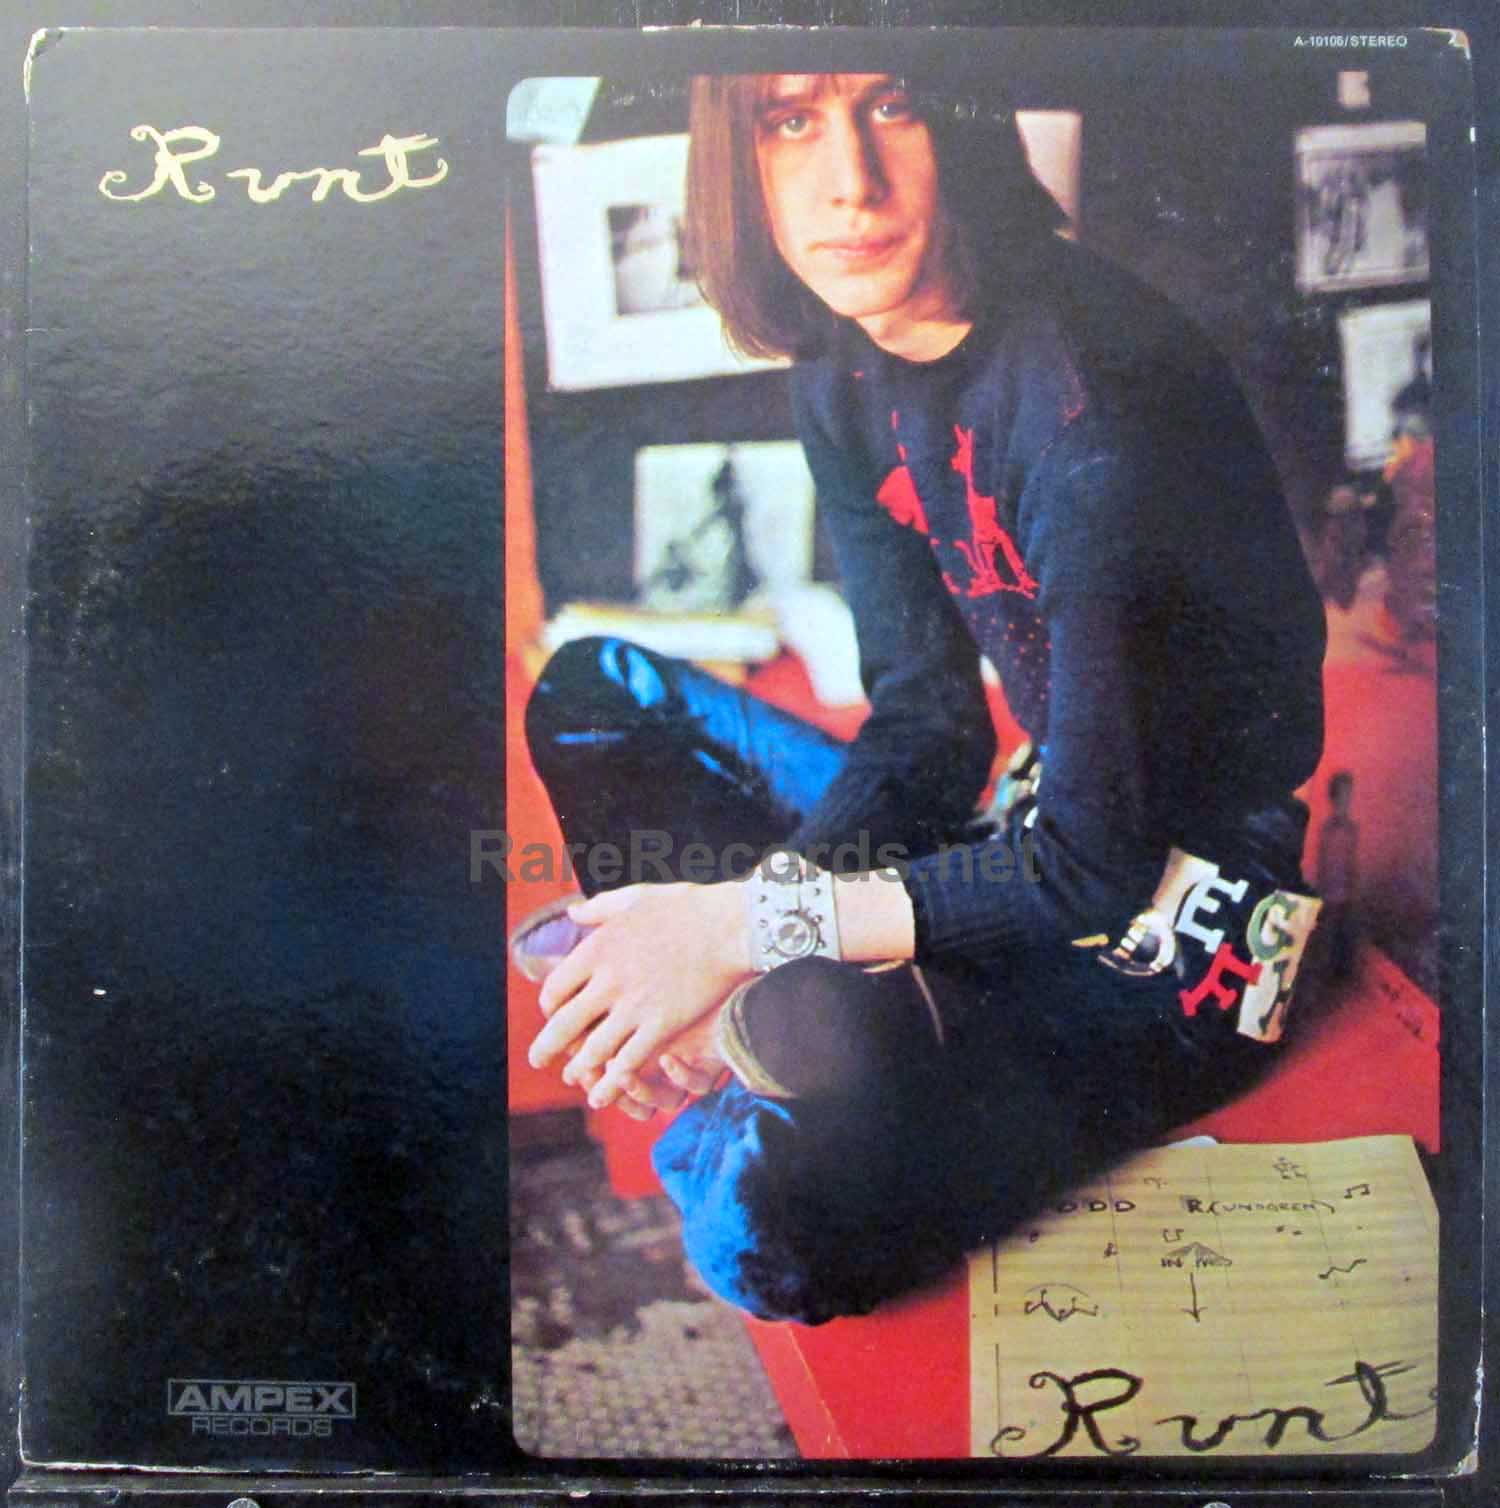 Todd Rundgren - Runt 1970 U.S. Ampex LP alternate version w/2 extra tracks